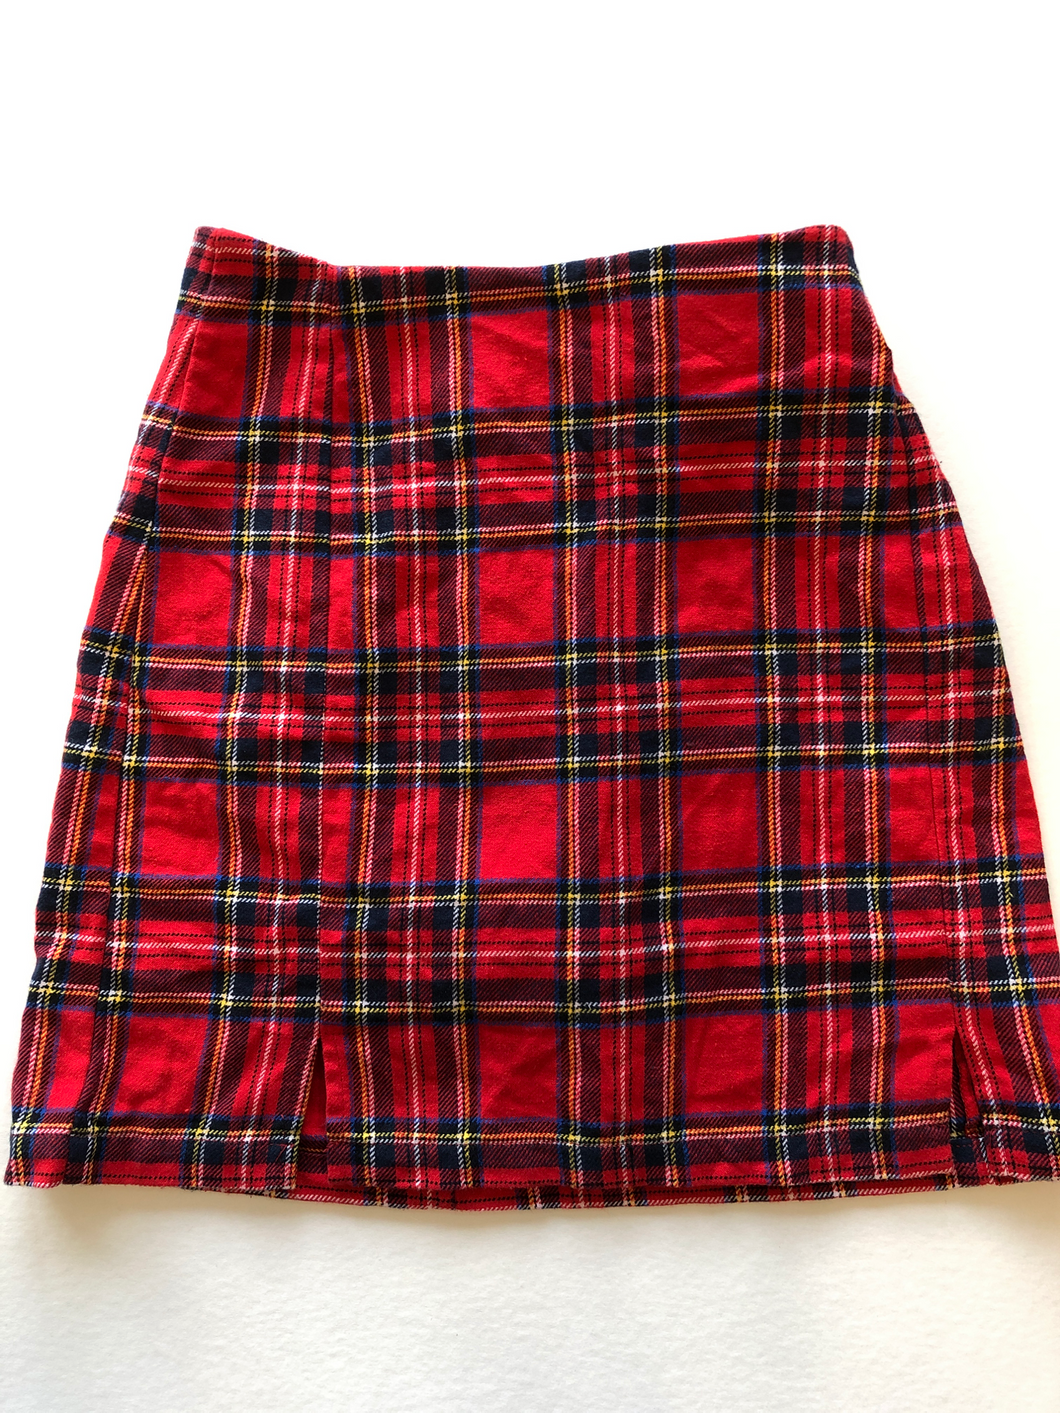 Brandy Melville Short Skirt Size Extra Small